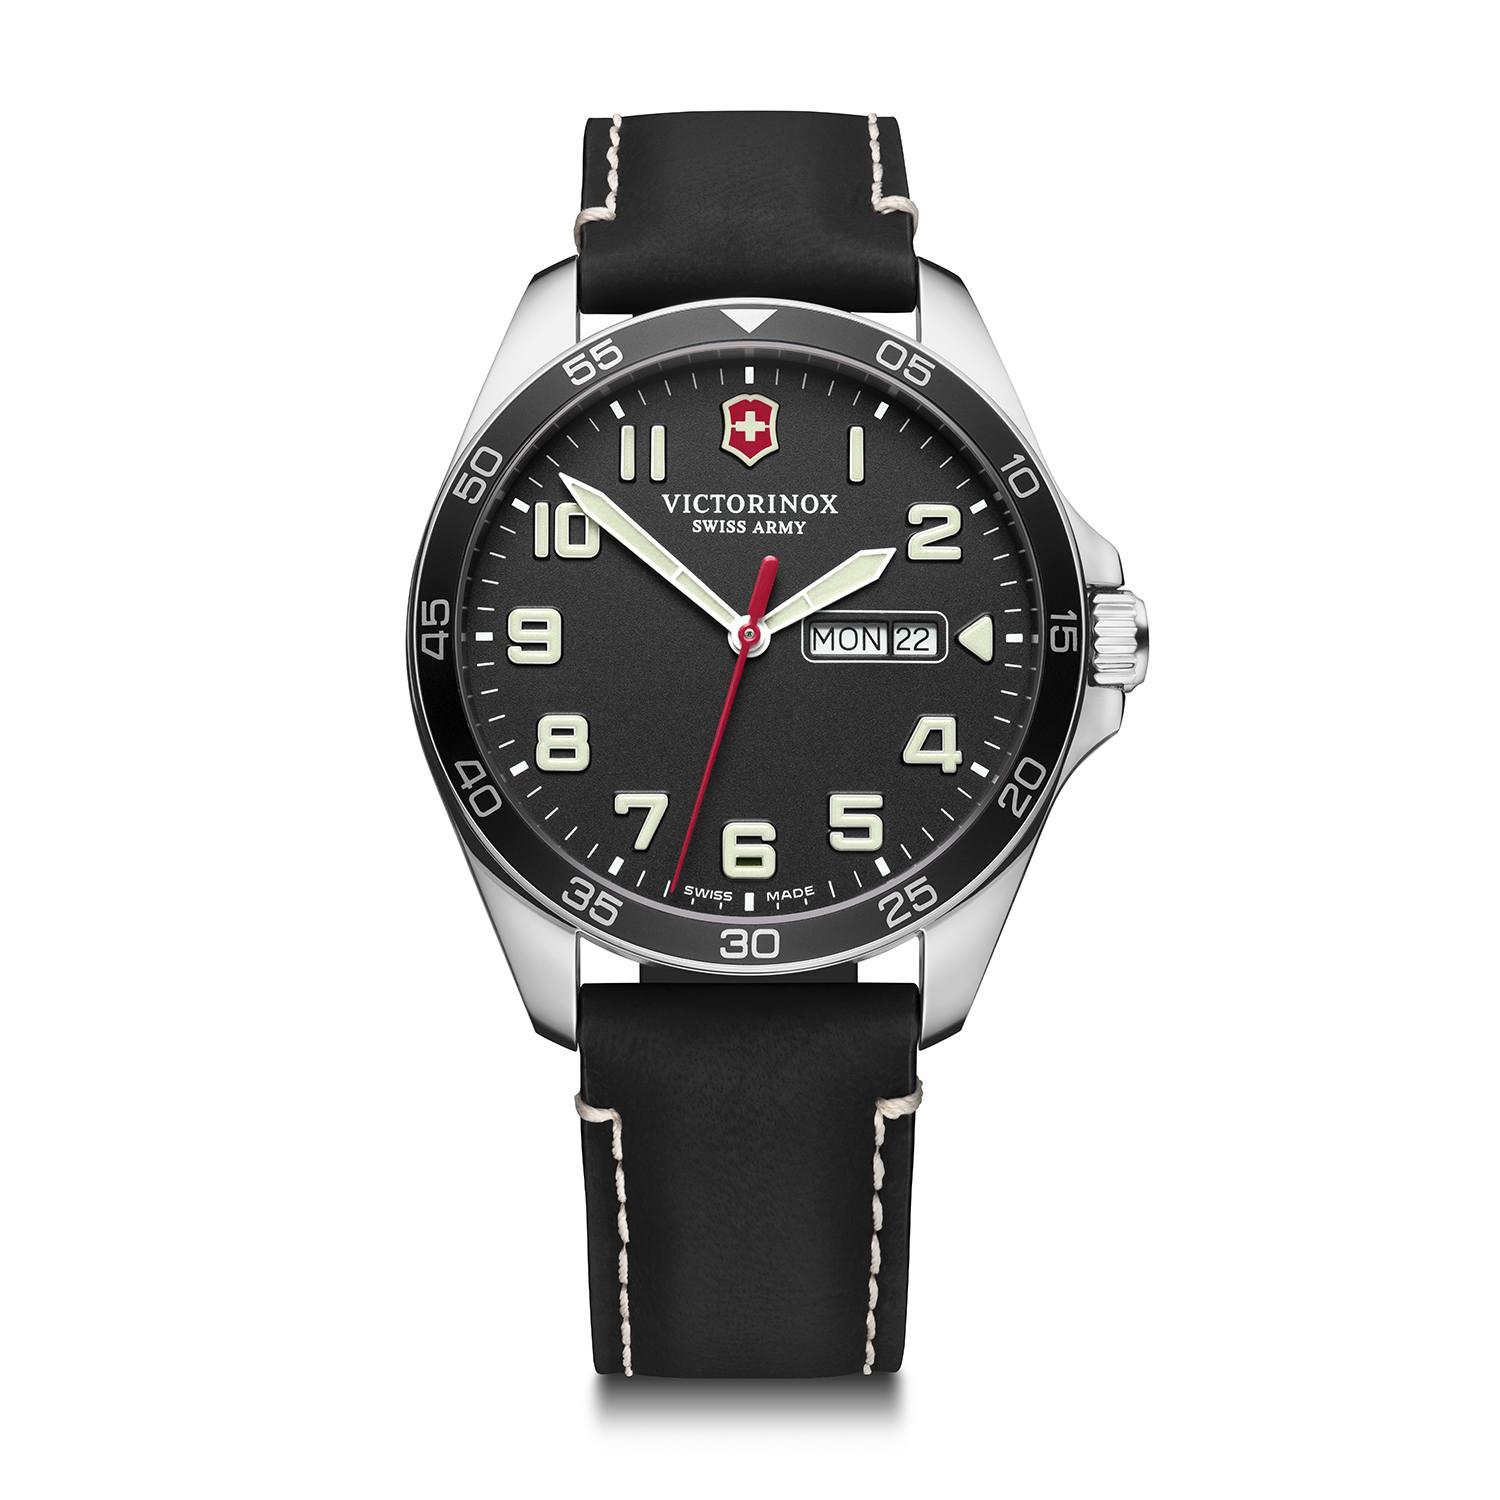  Victorinox Swiss Army Fieldforce Gents Timepiece